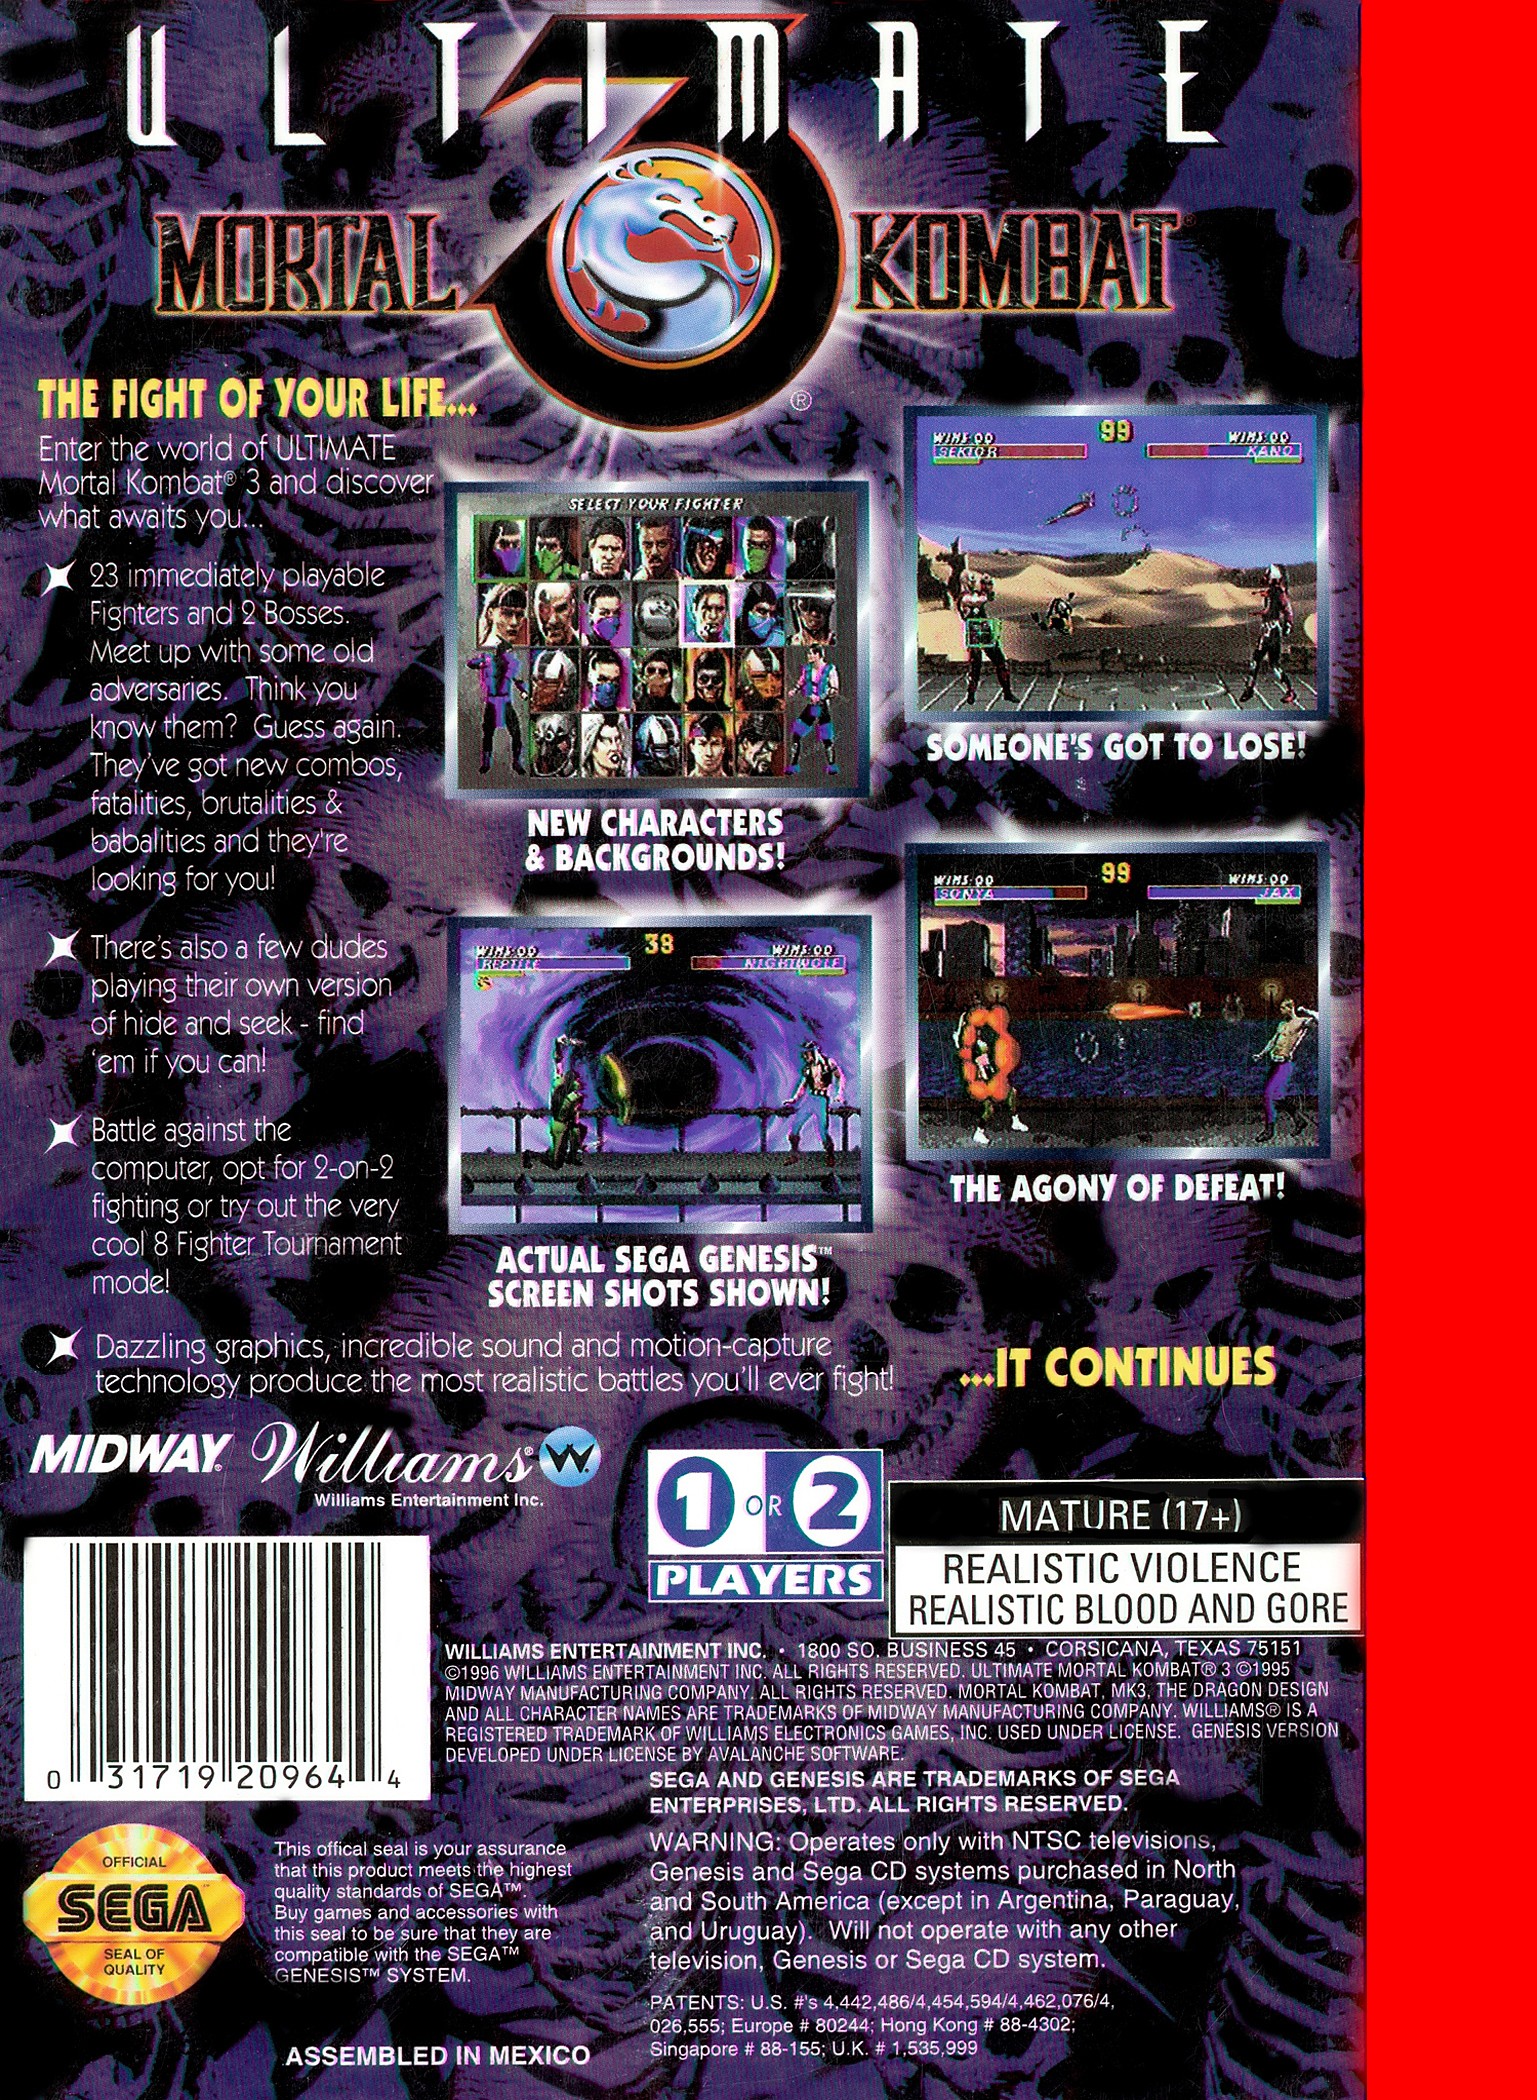 Мортал комбат 3 трилогия. Ultimate Mortal Kombat 3. Mortal Kombat 3 Ultimate Sega. Mortal Kombat Ultimate Sega обложка. Mortal Kombat 3 Ultimate сега.